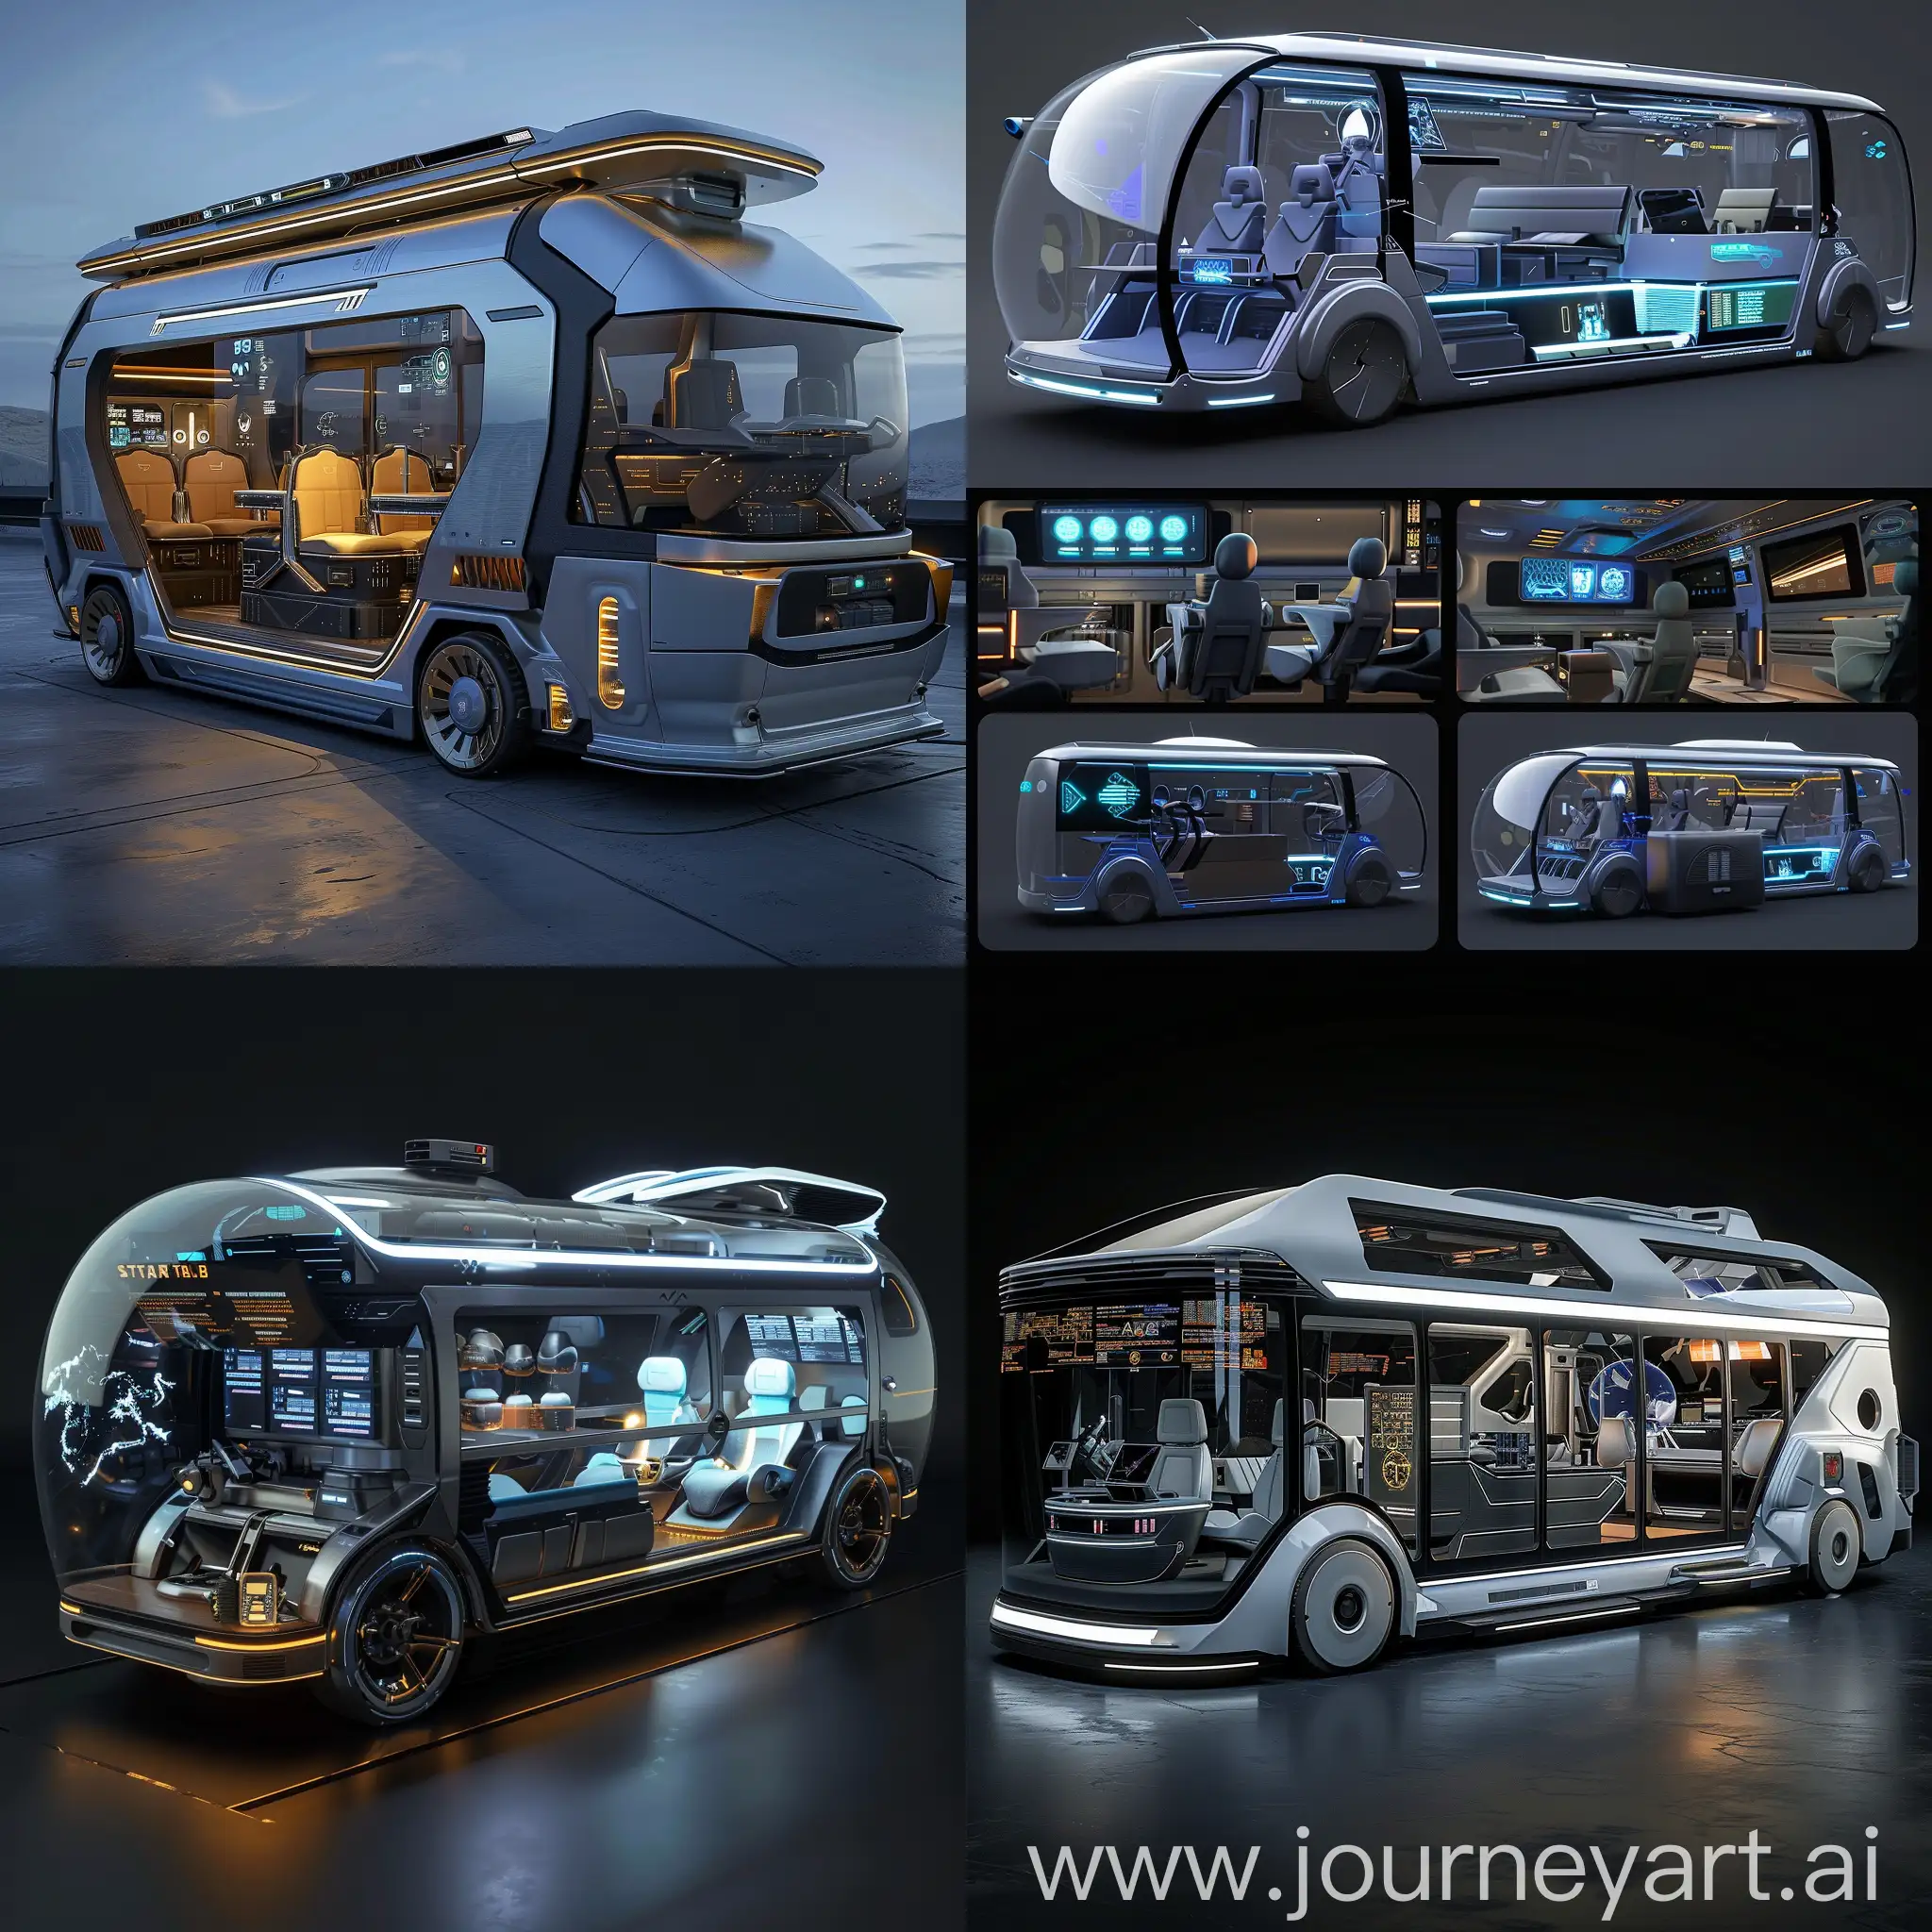 Futuristic-Microbus-with-Transparent-Aluminum-Windows-and-Smart-Features